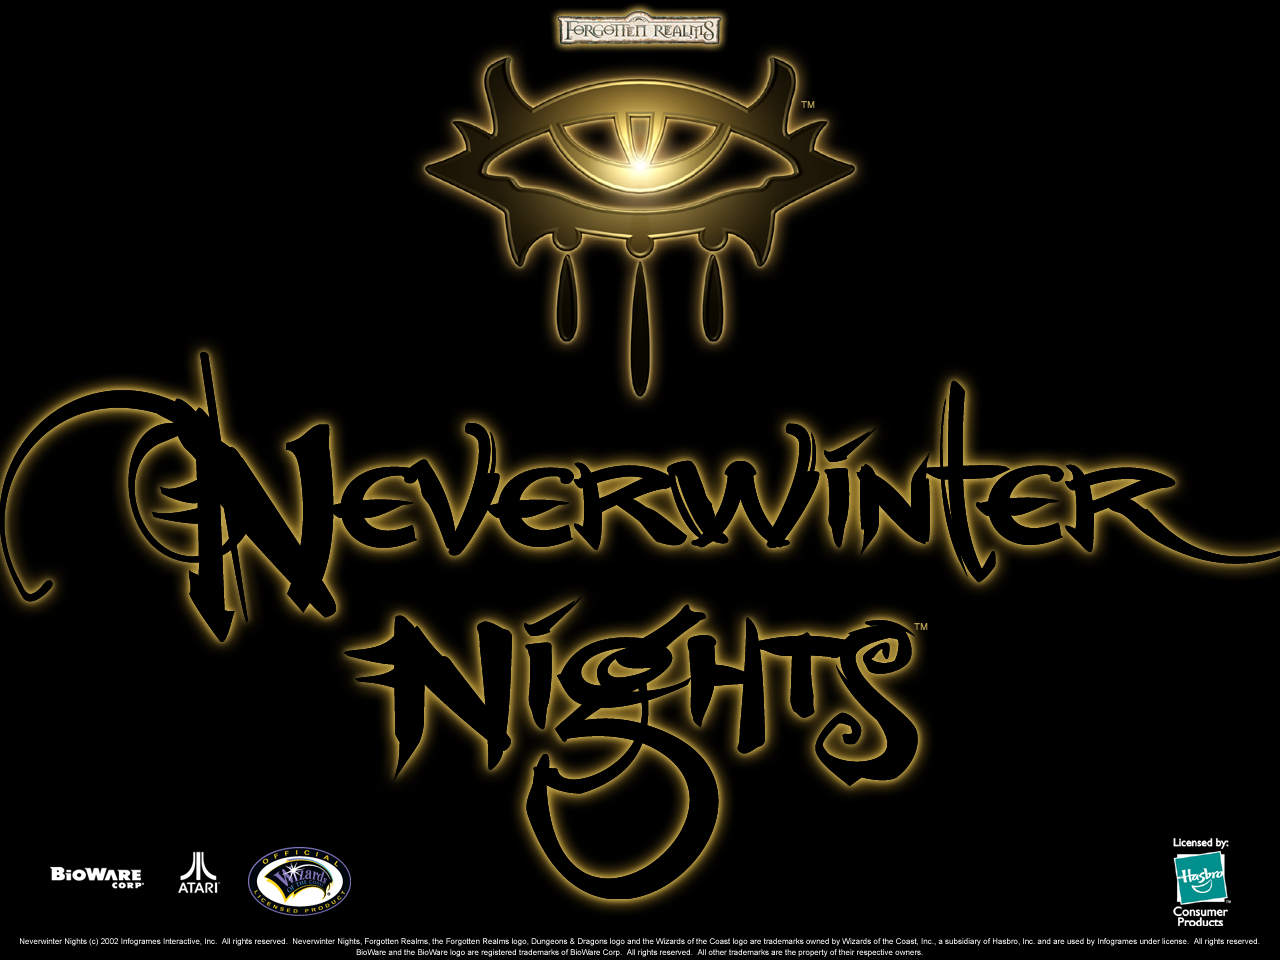 Neverwinter nights not on steam фото 55